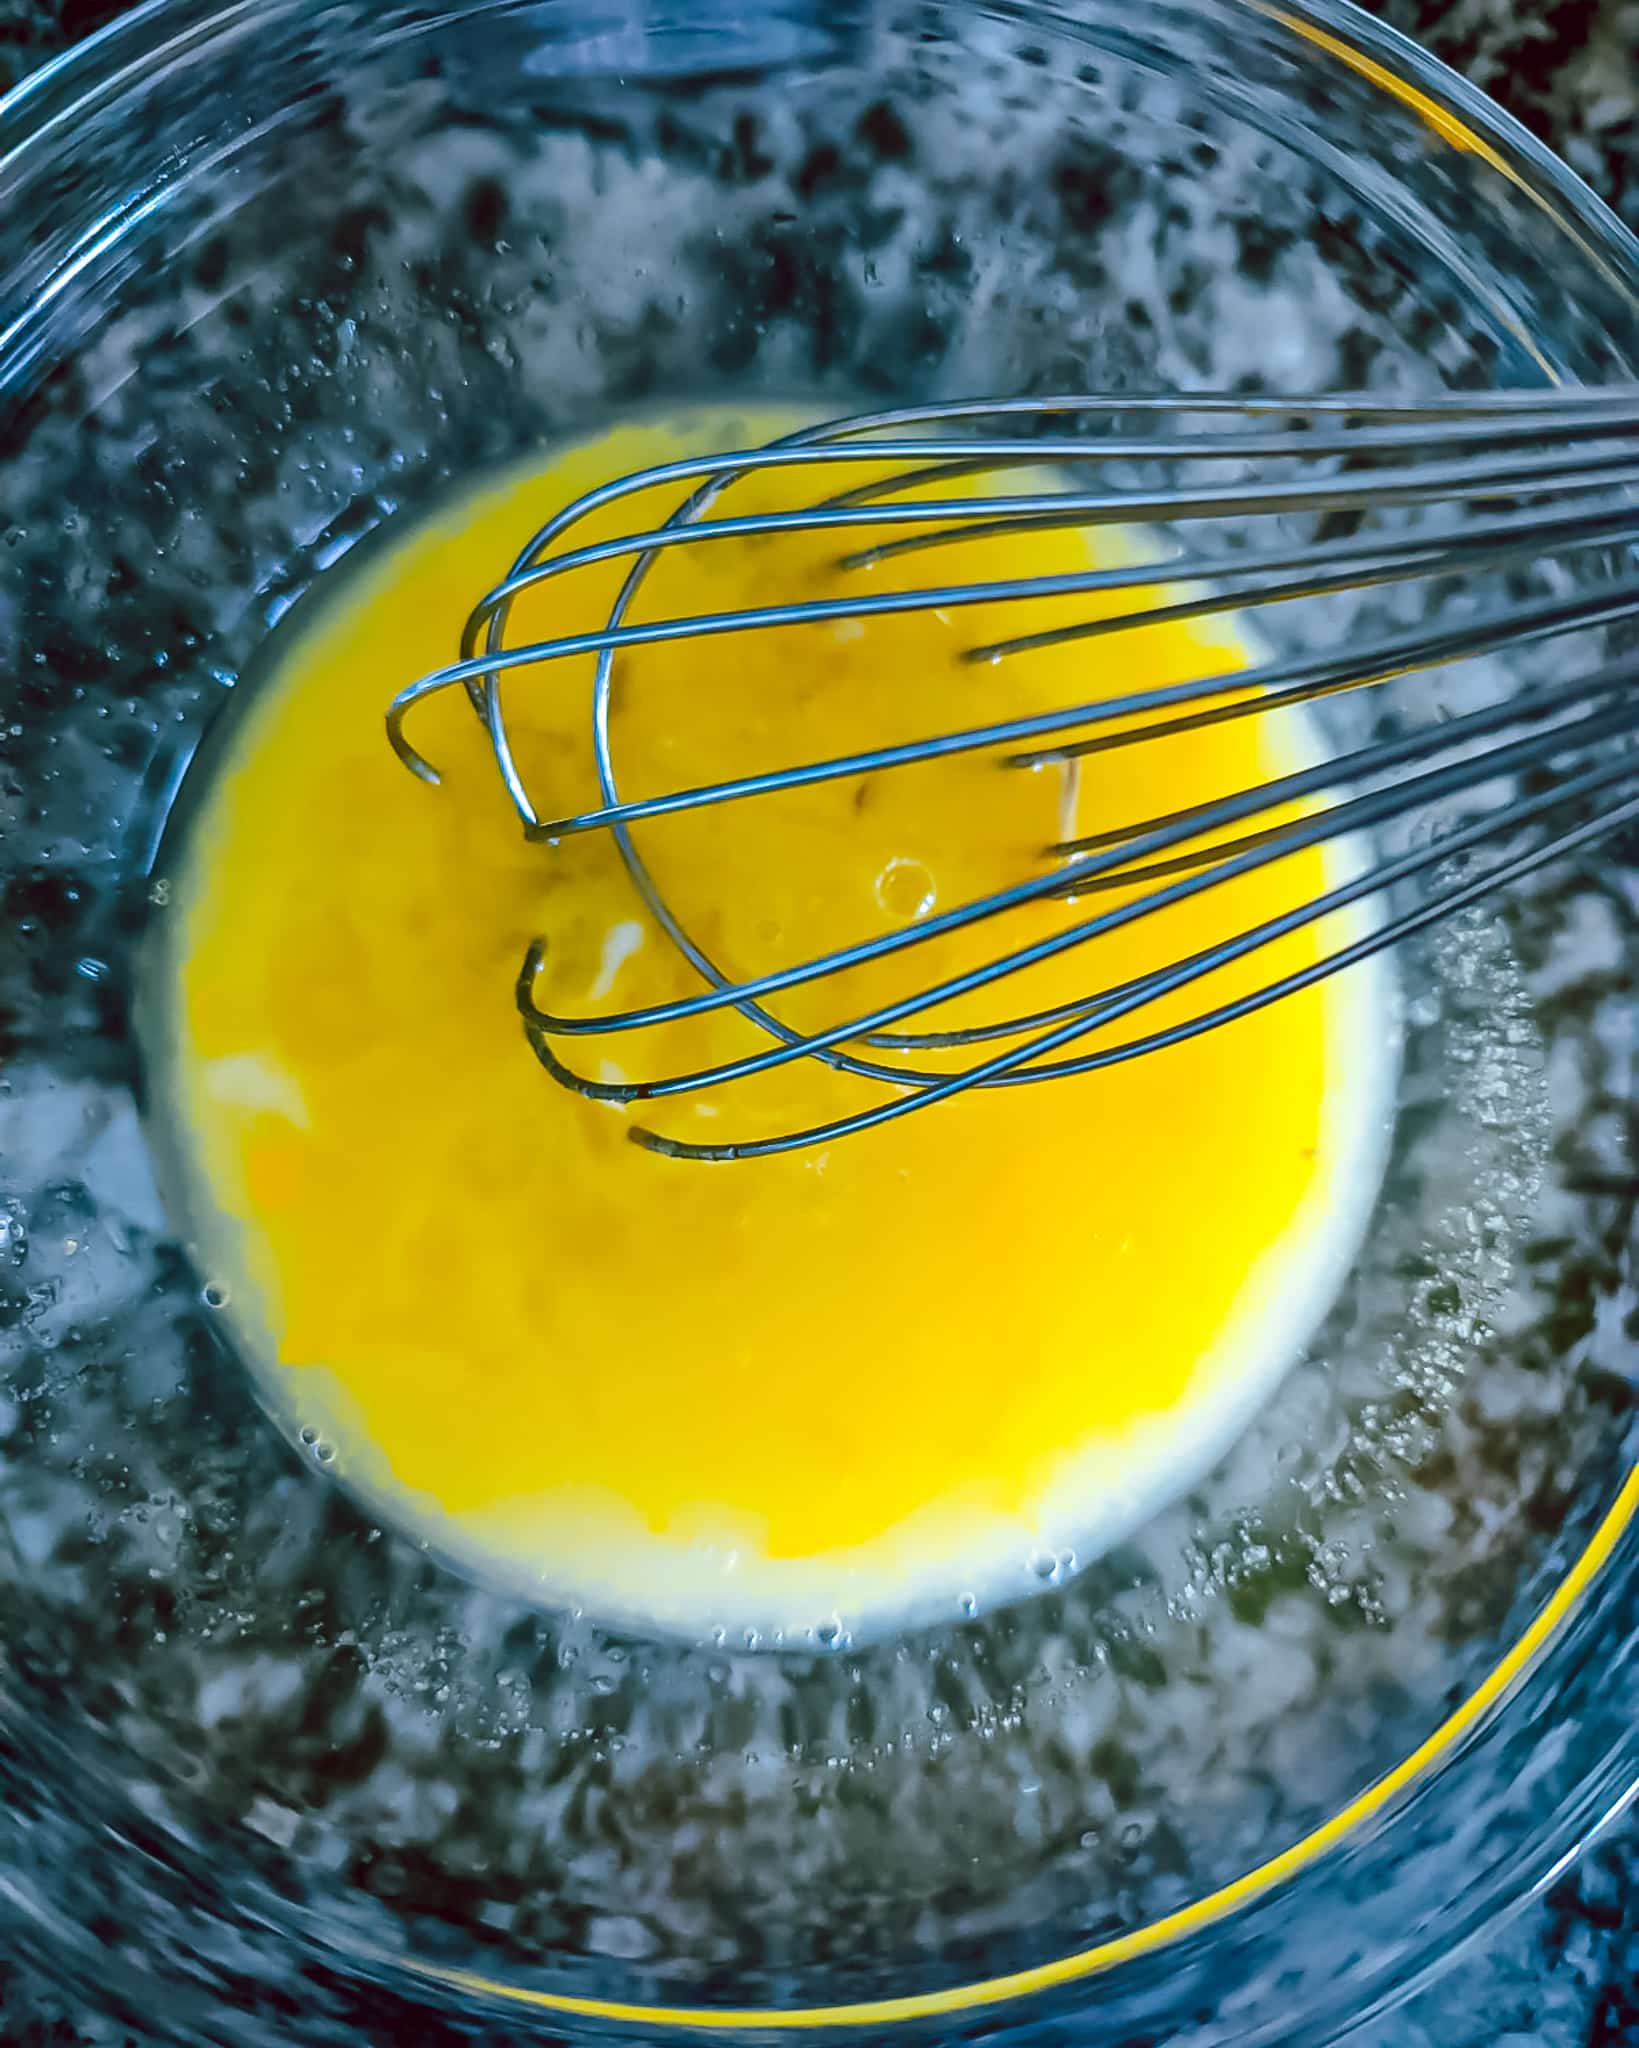 Showing eggs, sugar, and lemon mixing